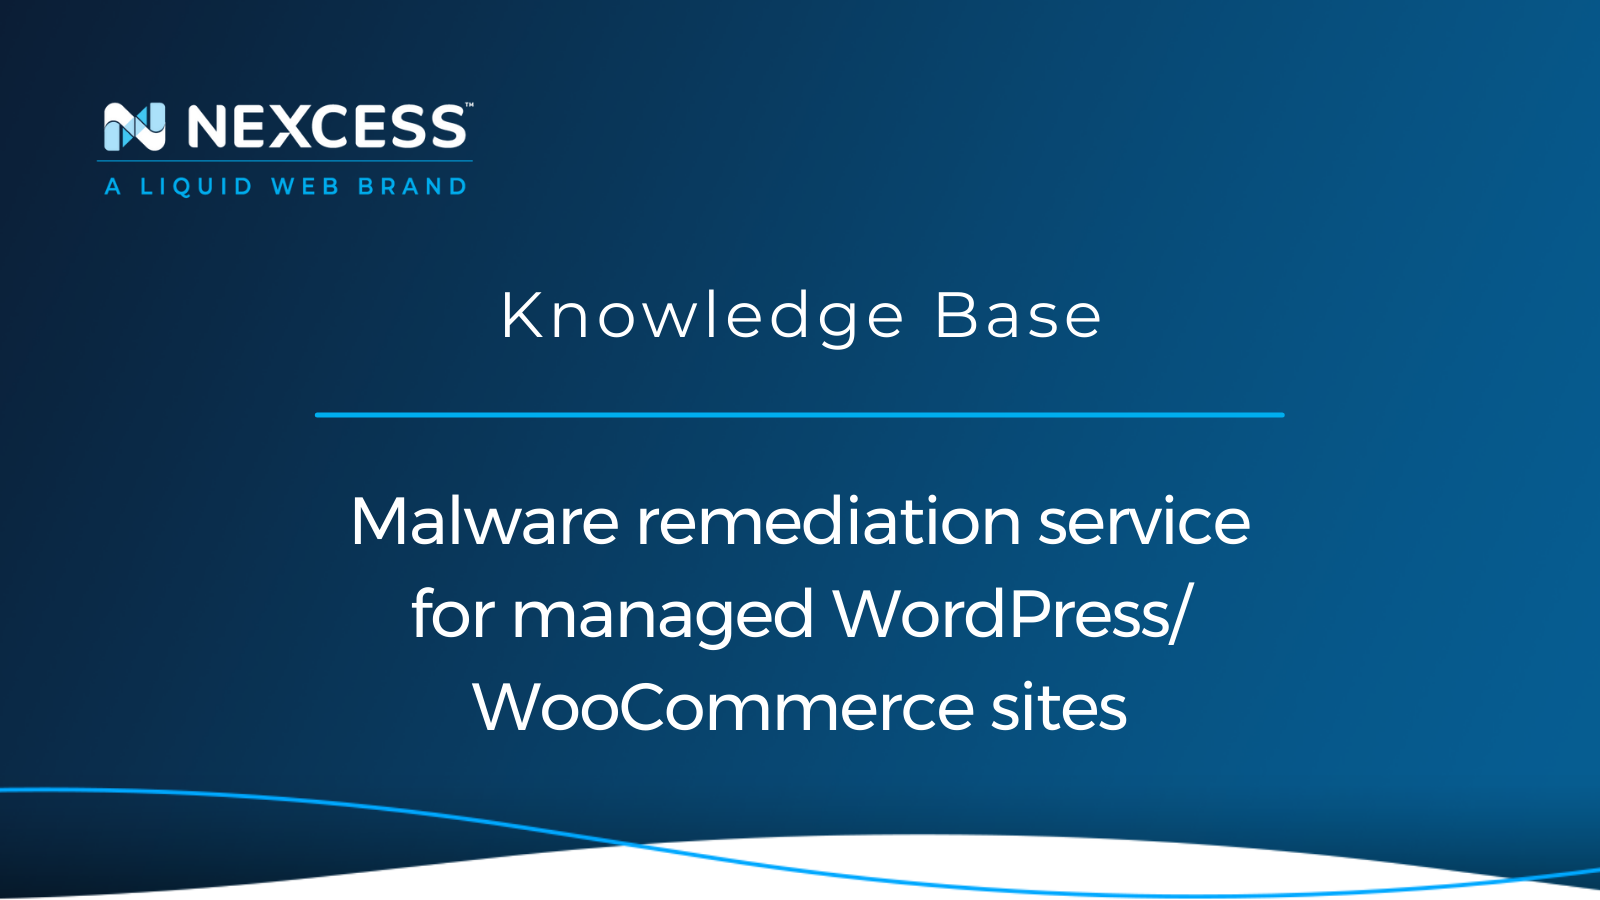 Malware remediation service for managed WordPress/WooCommerce sites